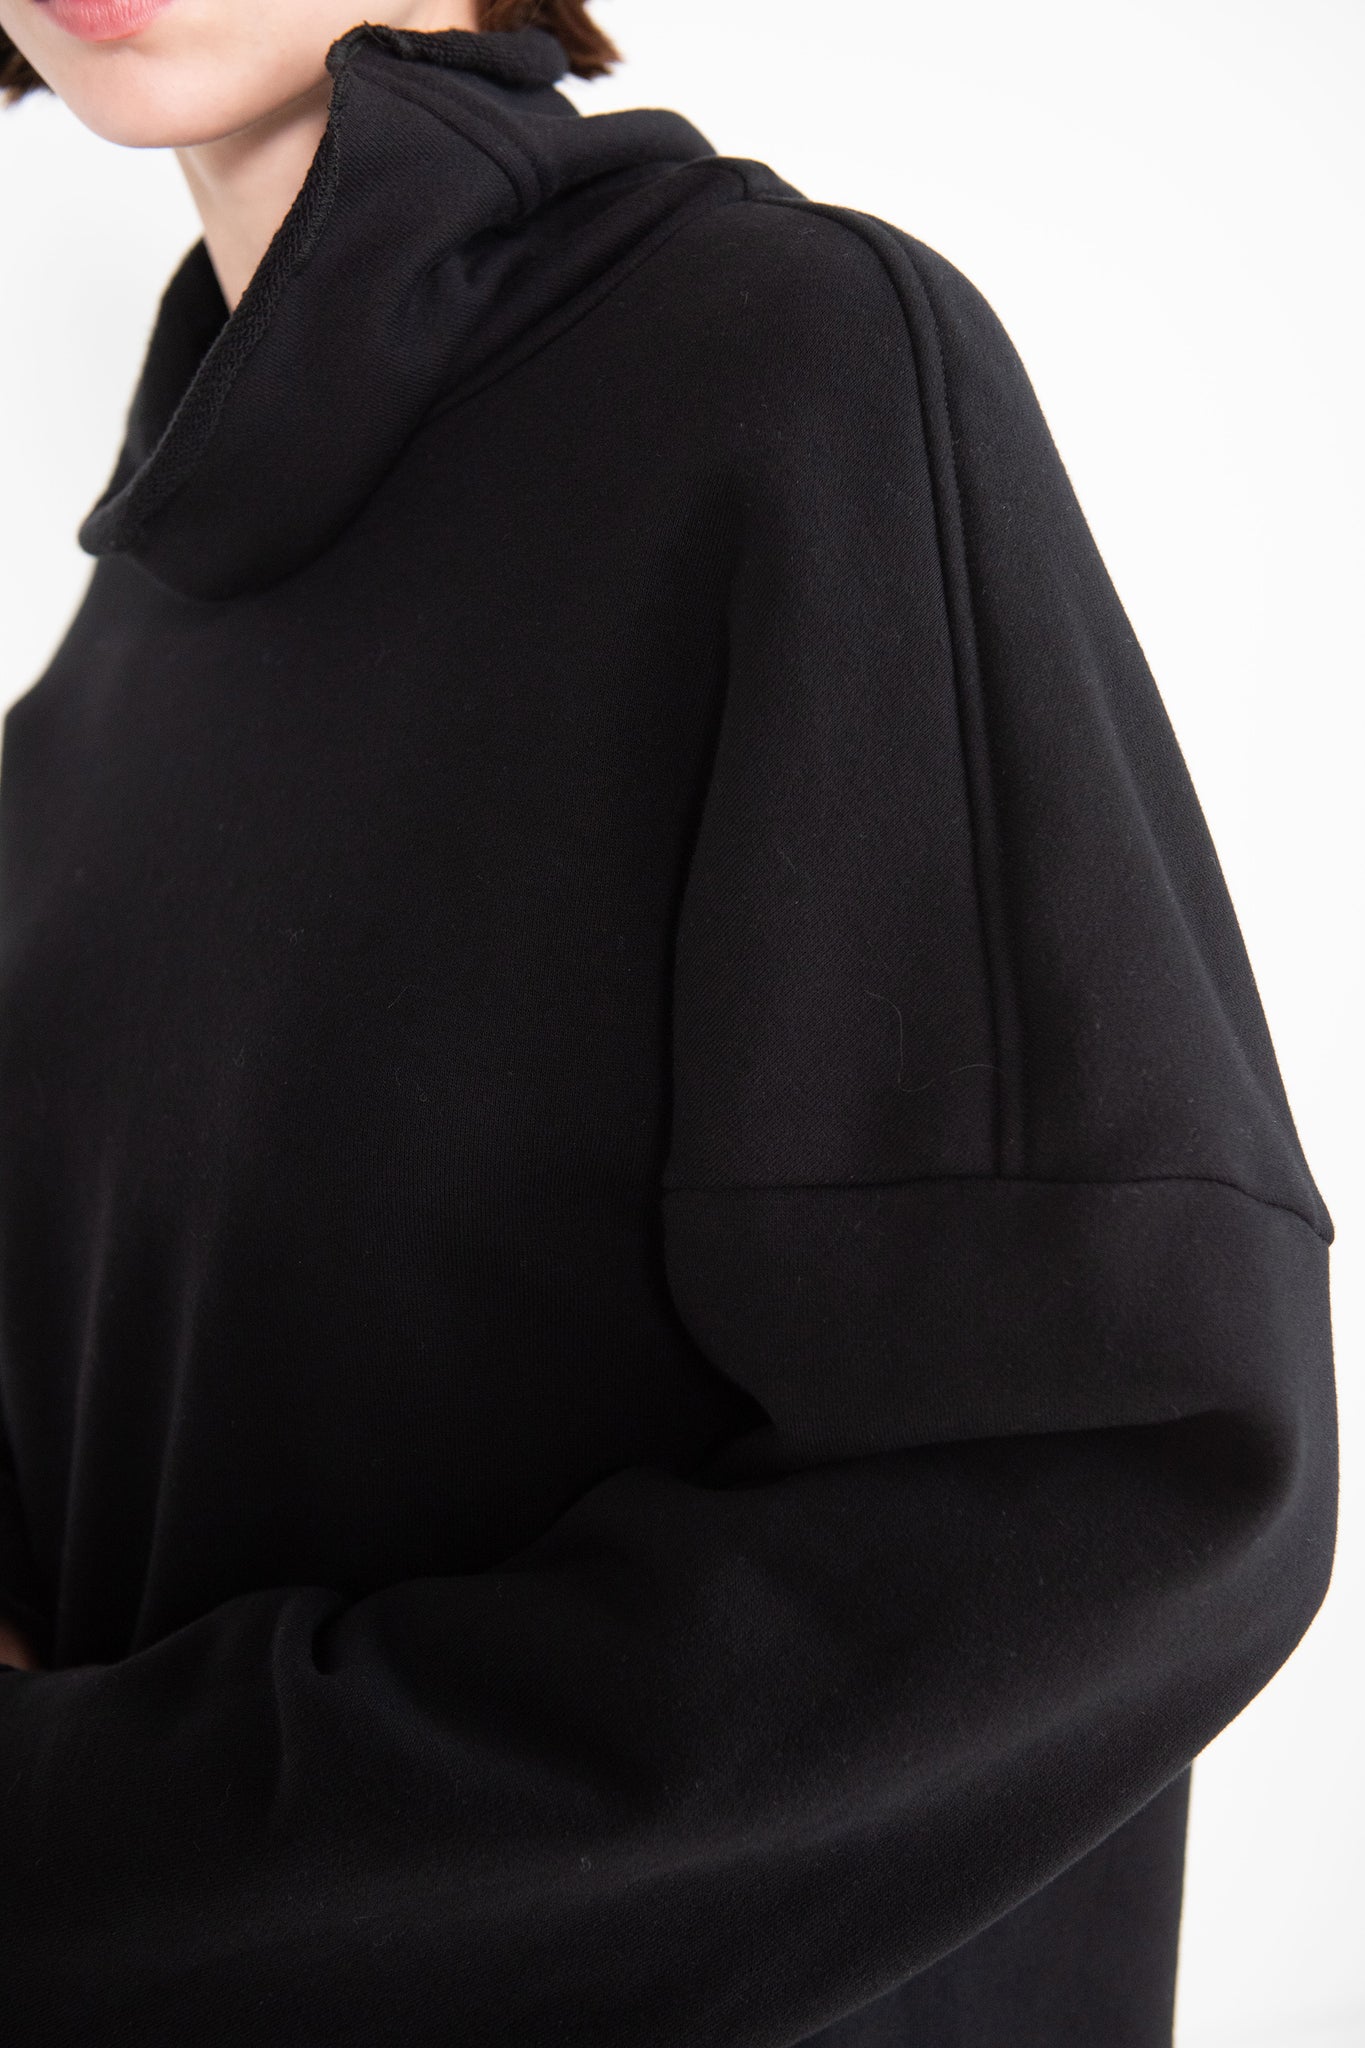 GAUCHERE - Oversized Raw Edge Turtleneck Sweater, Black